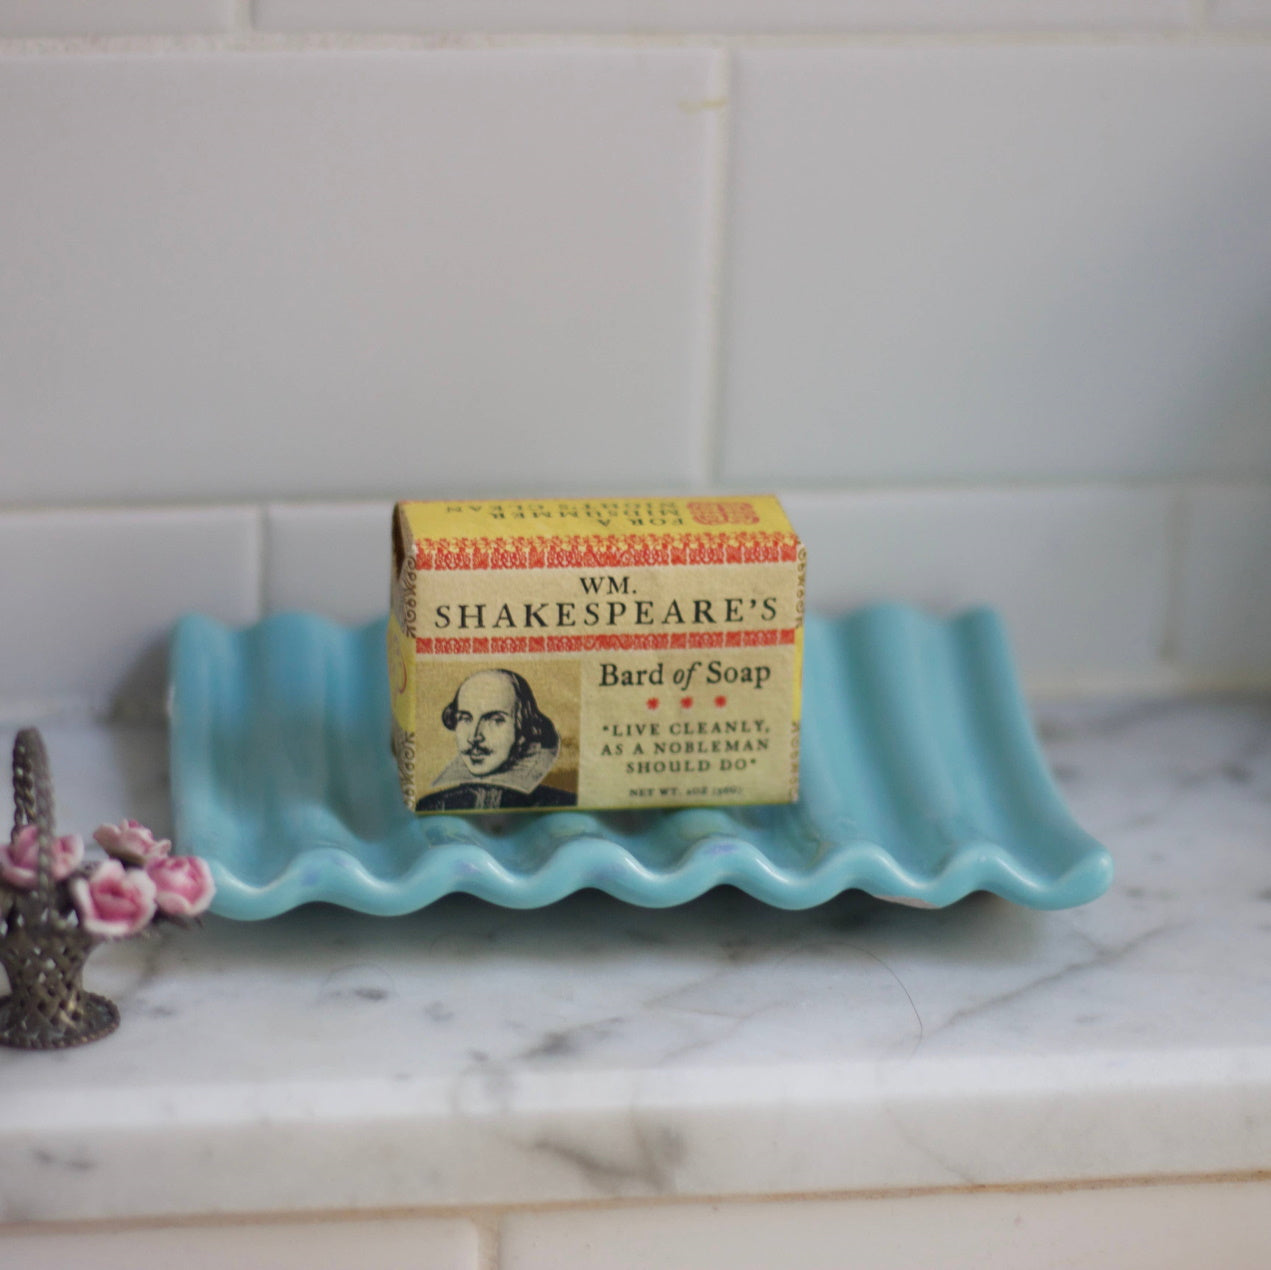 Shakespeare's Mini Bard of Soap